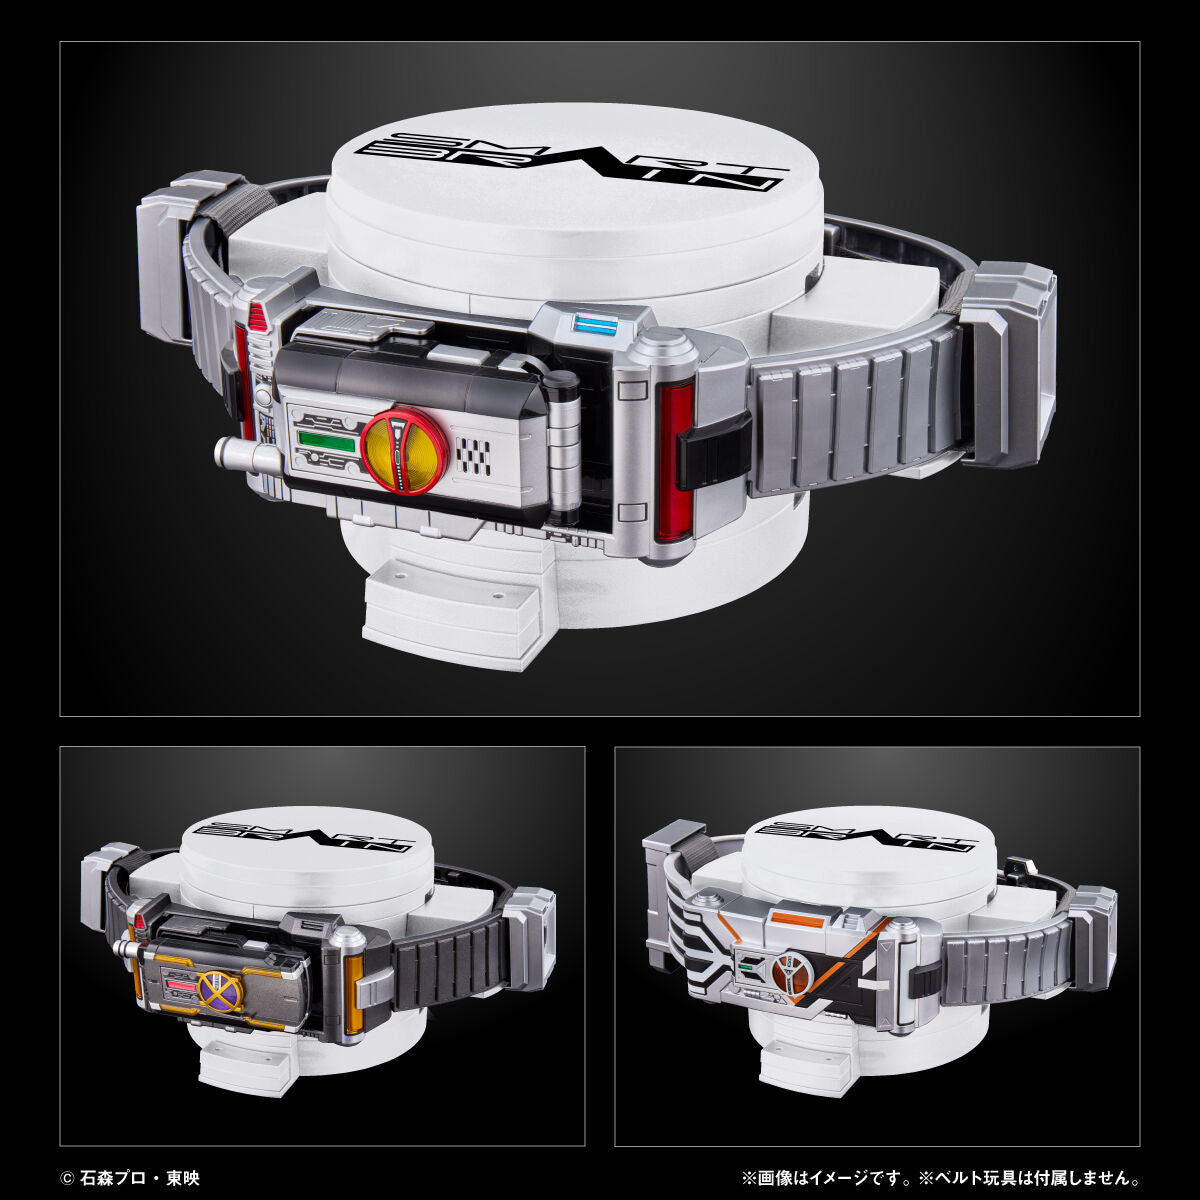 Bandai - Arsenal Toy - Kamen Rider - Display Pedestal Smart Brain Edition (White)